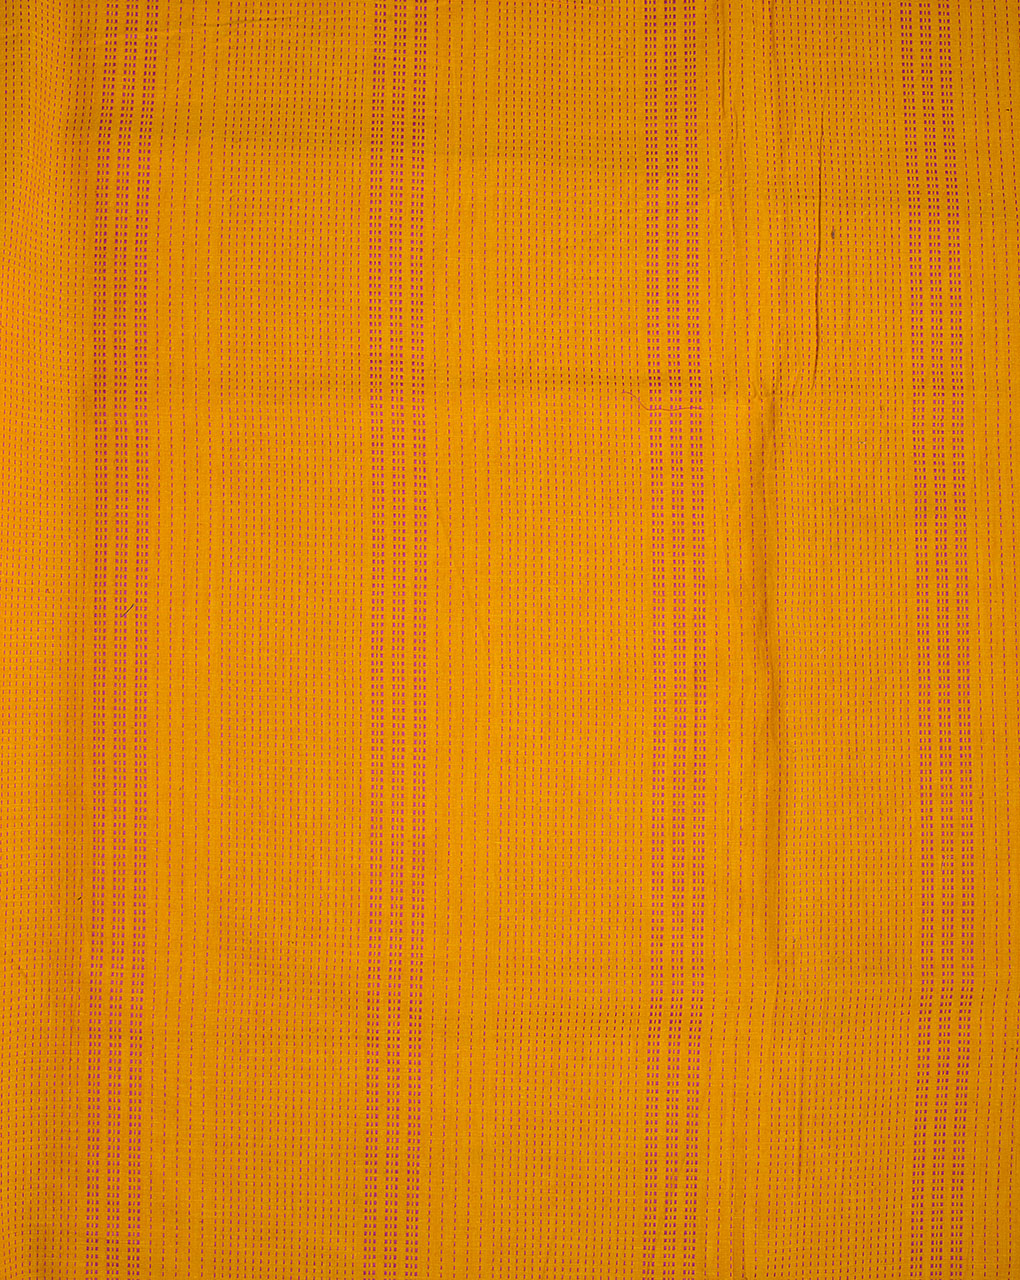 ( Pre Cut 1.25 MTR ) Woven Kantha Loom Textured Cotton Fabric